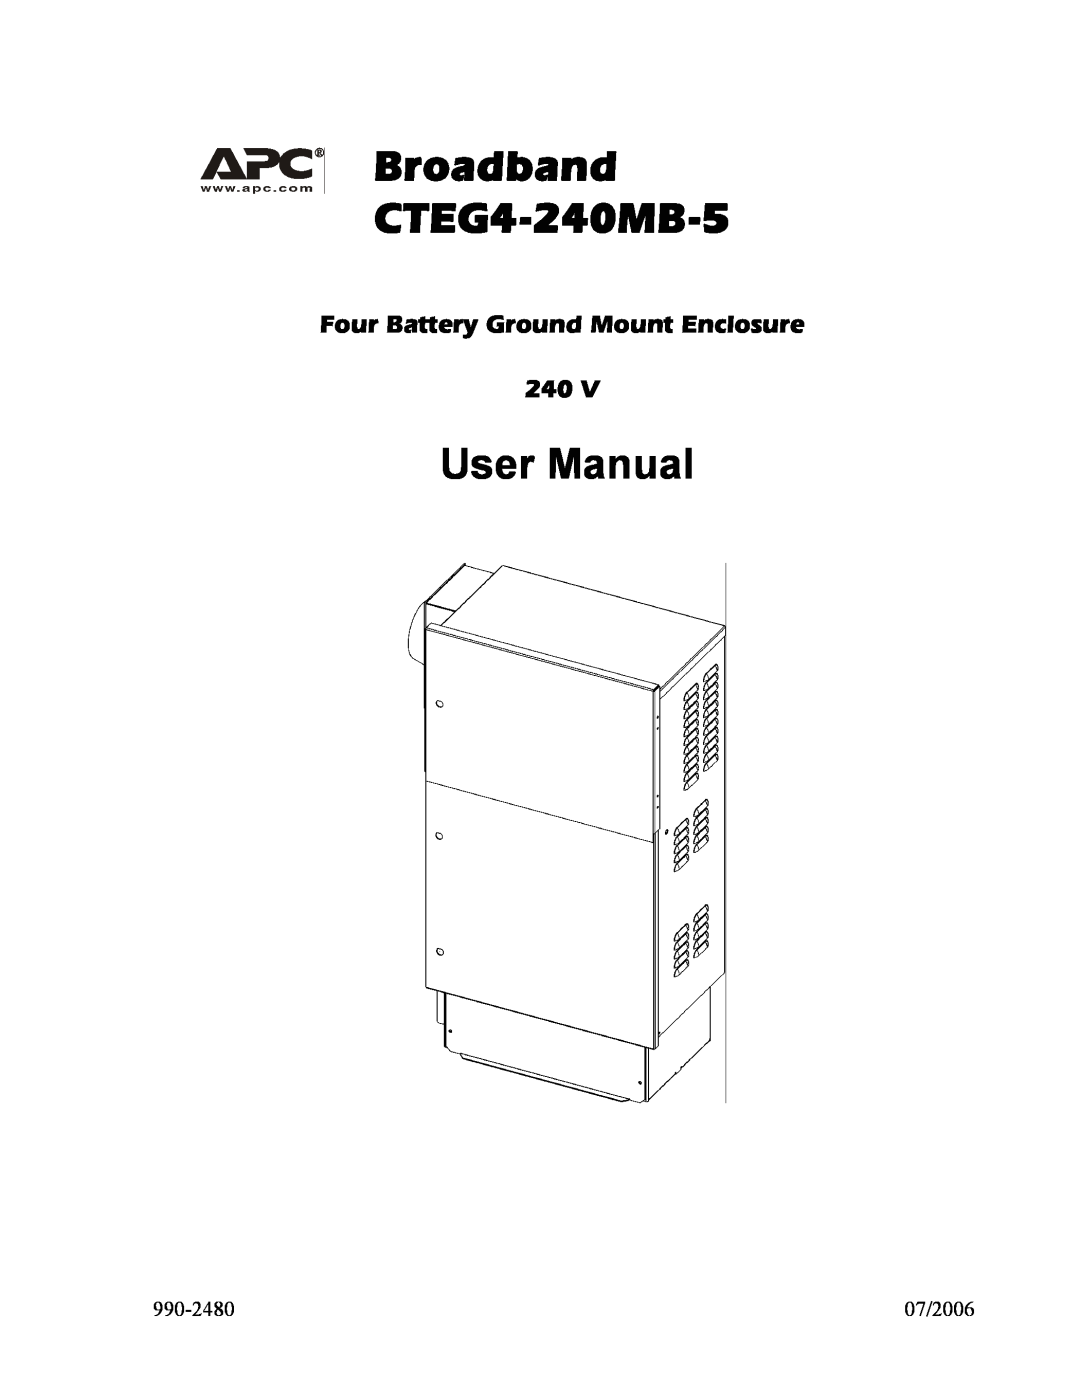 American Power Conversion user manual Broadband CTEG4-240MB-5, User Manual, Four Battery Ground Mount Enclosure 240 